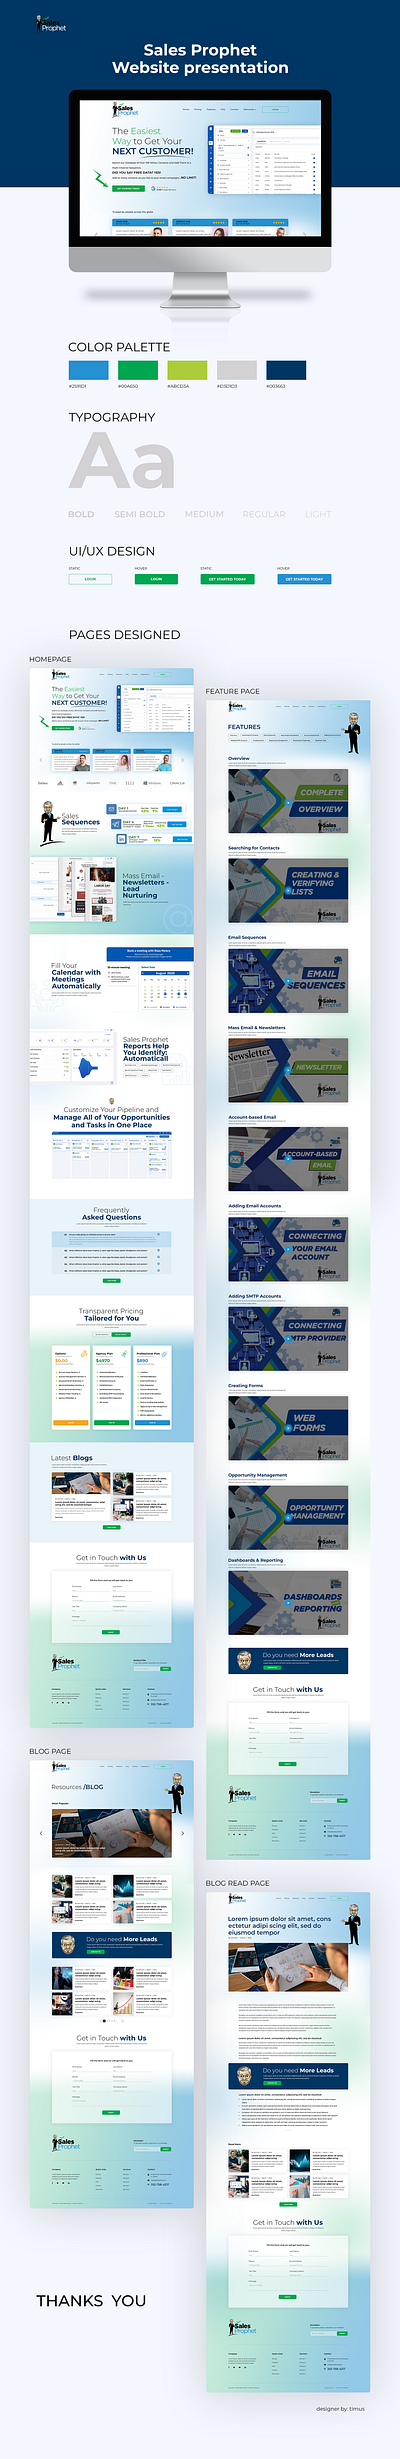 Sales Prophet website design presentation landing page design ui uiux ux web design website design